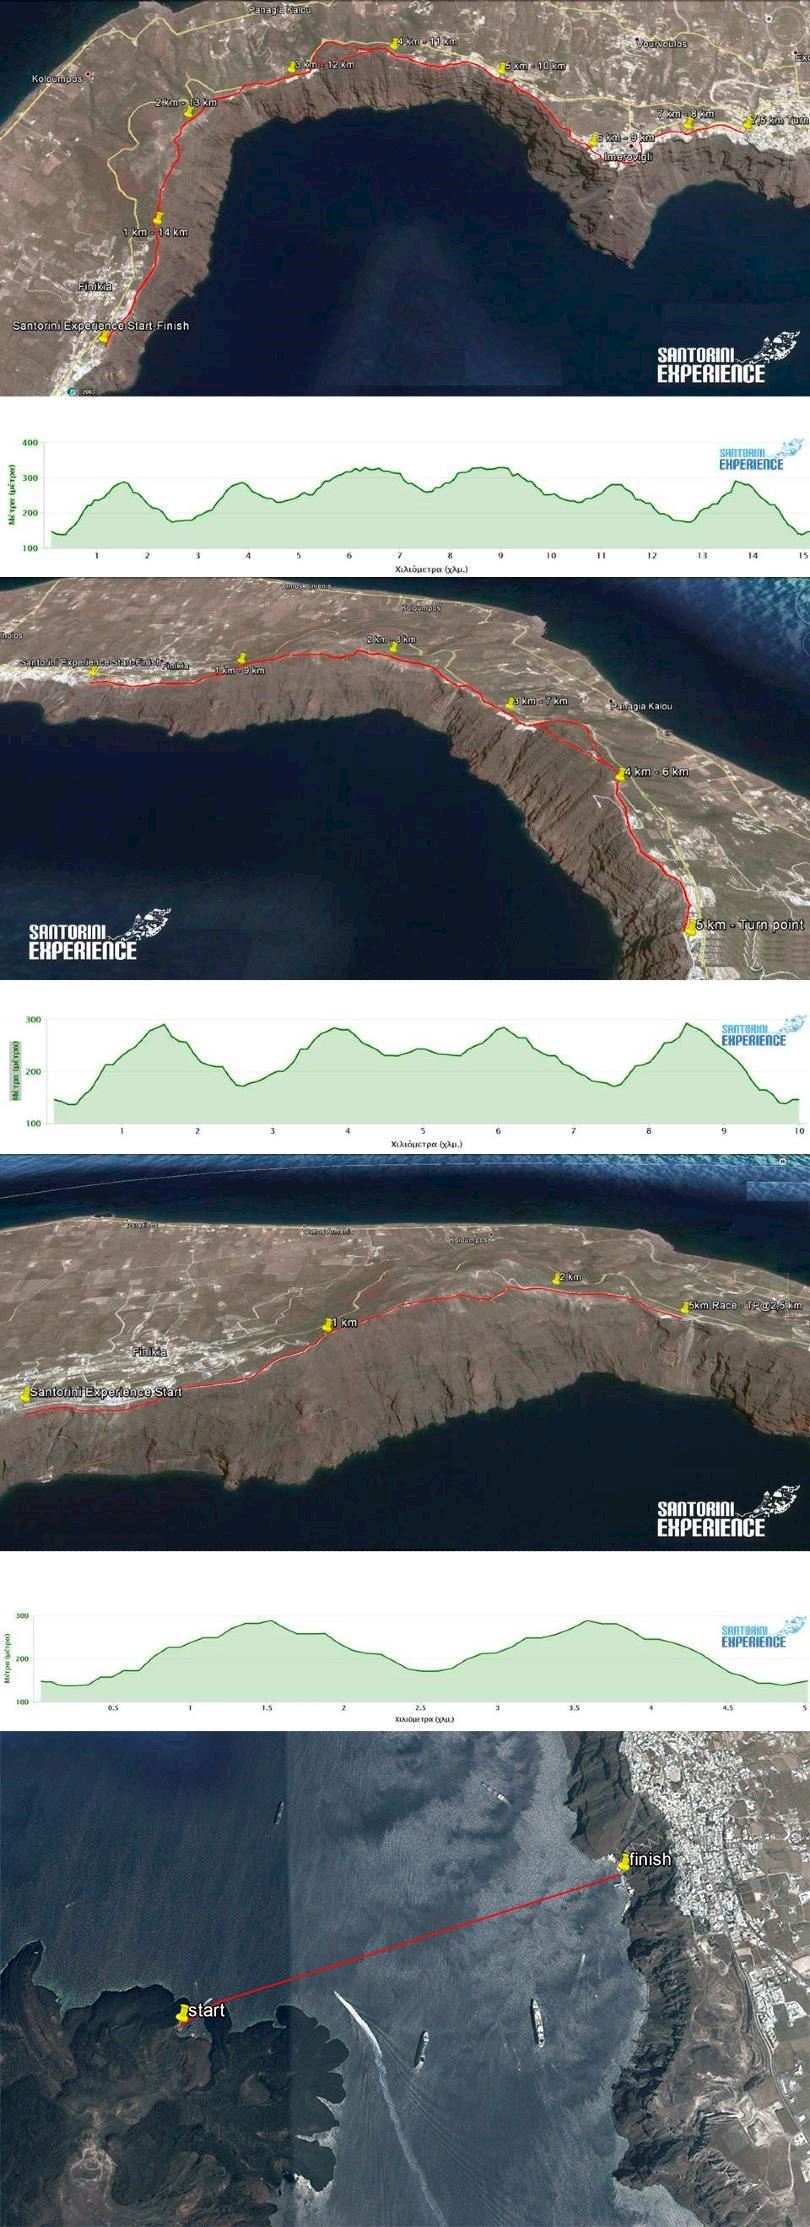 Santorini Experience Route Map